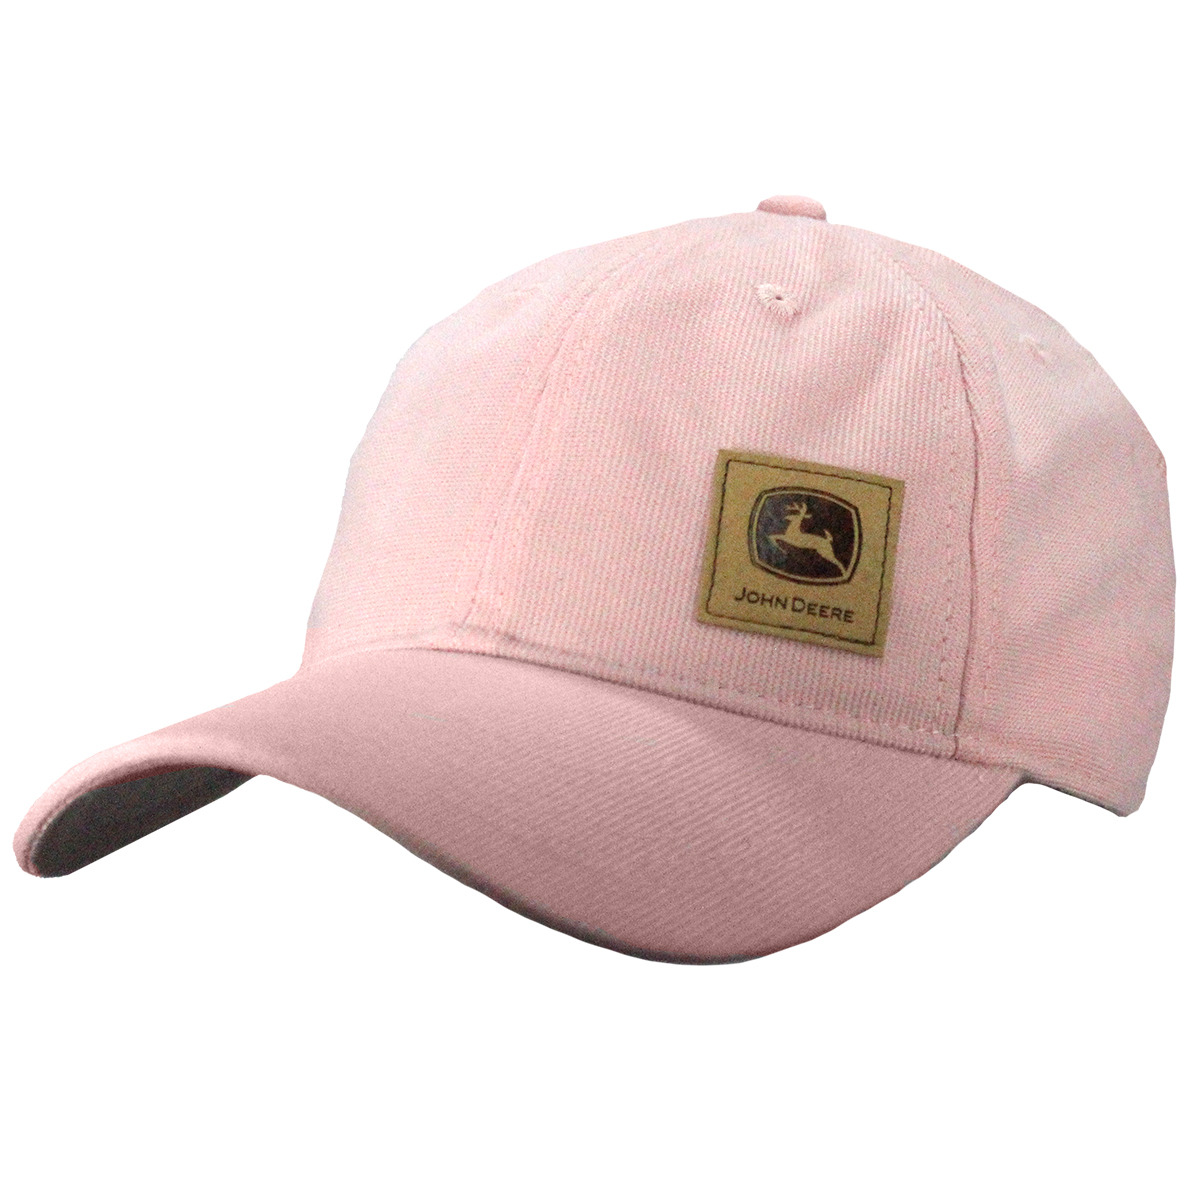 Women's Pink Corduroy Hat - LP78700